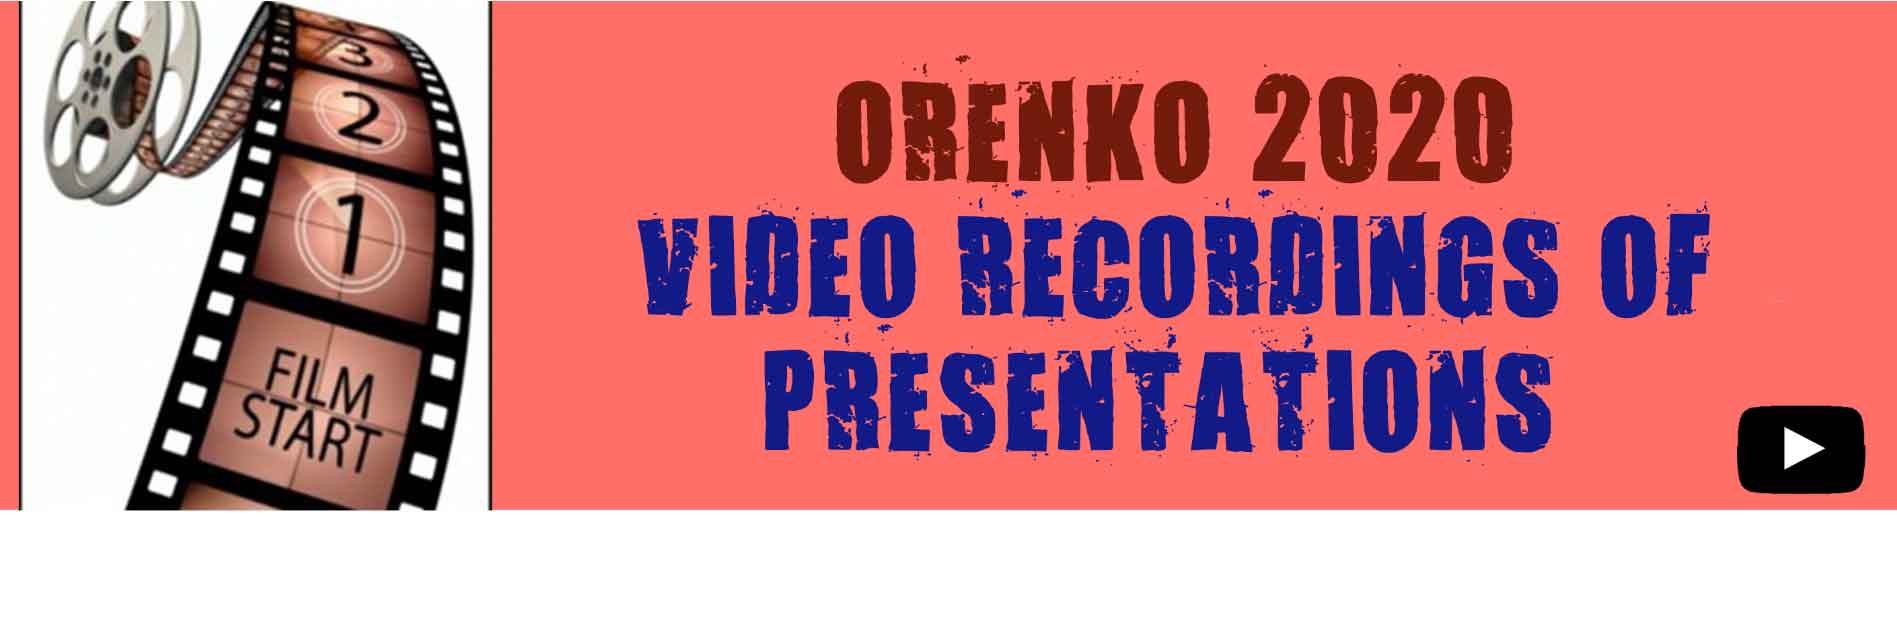 Orenko 2020 Video Recordings